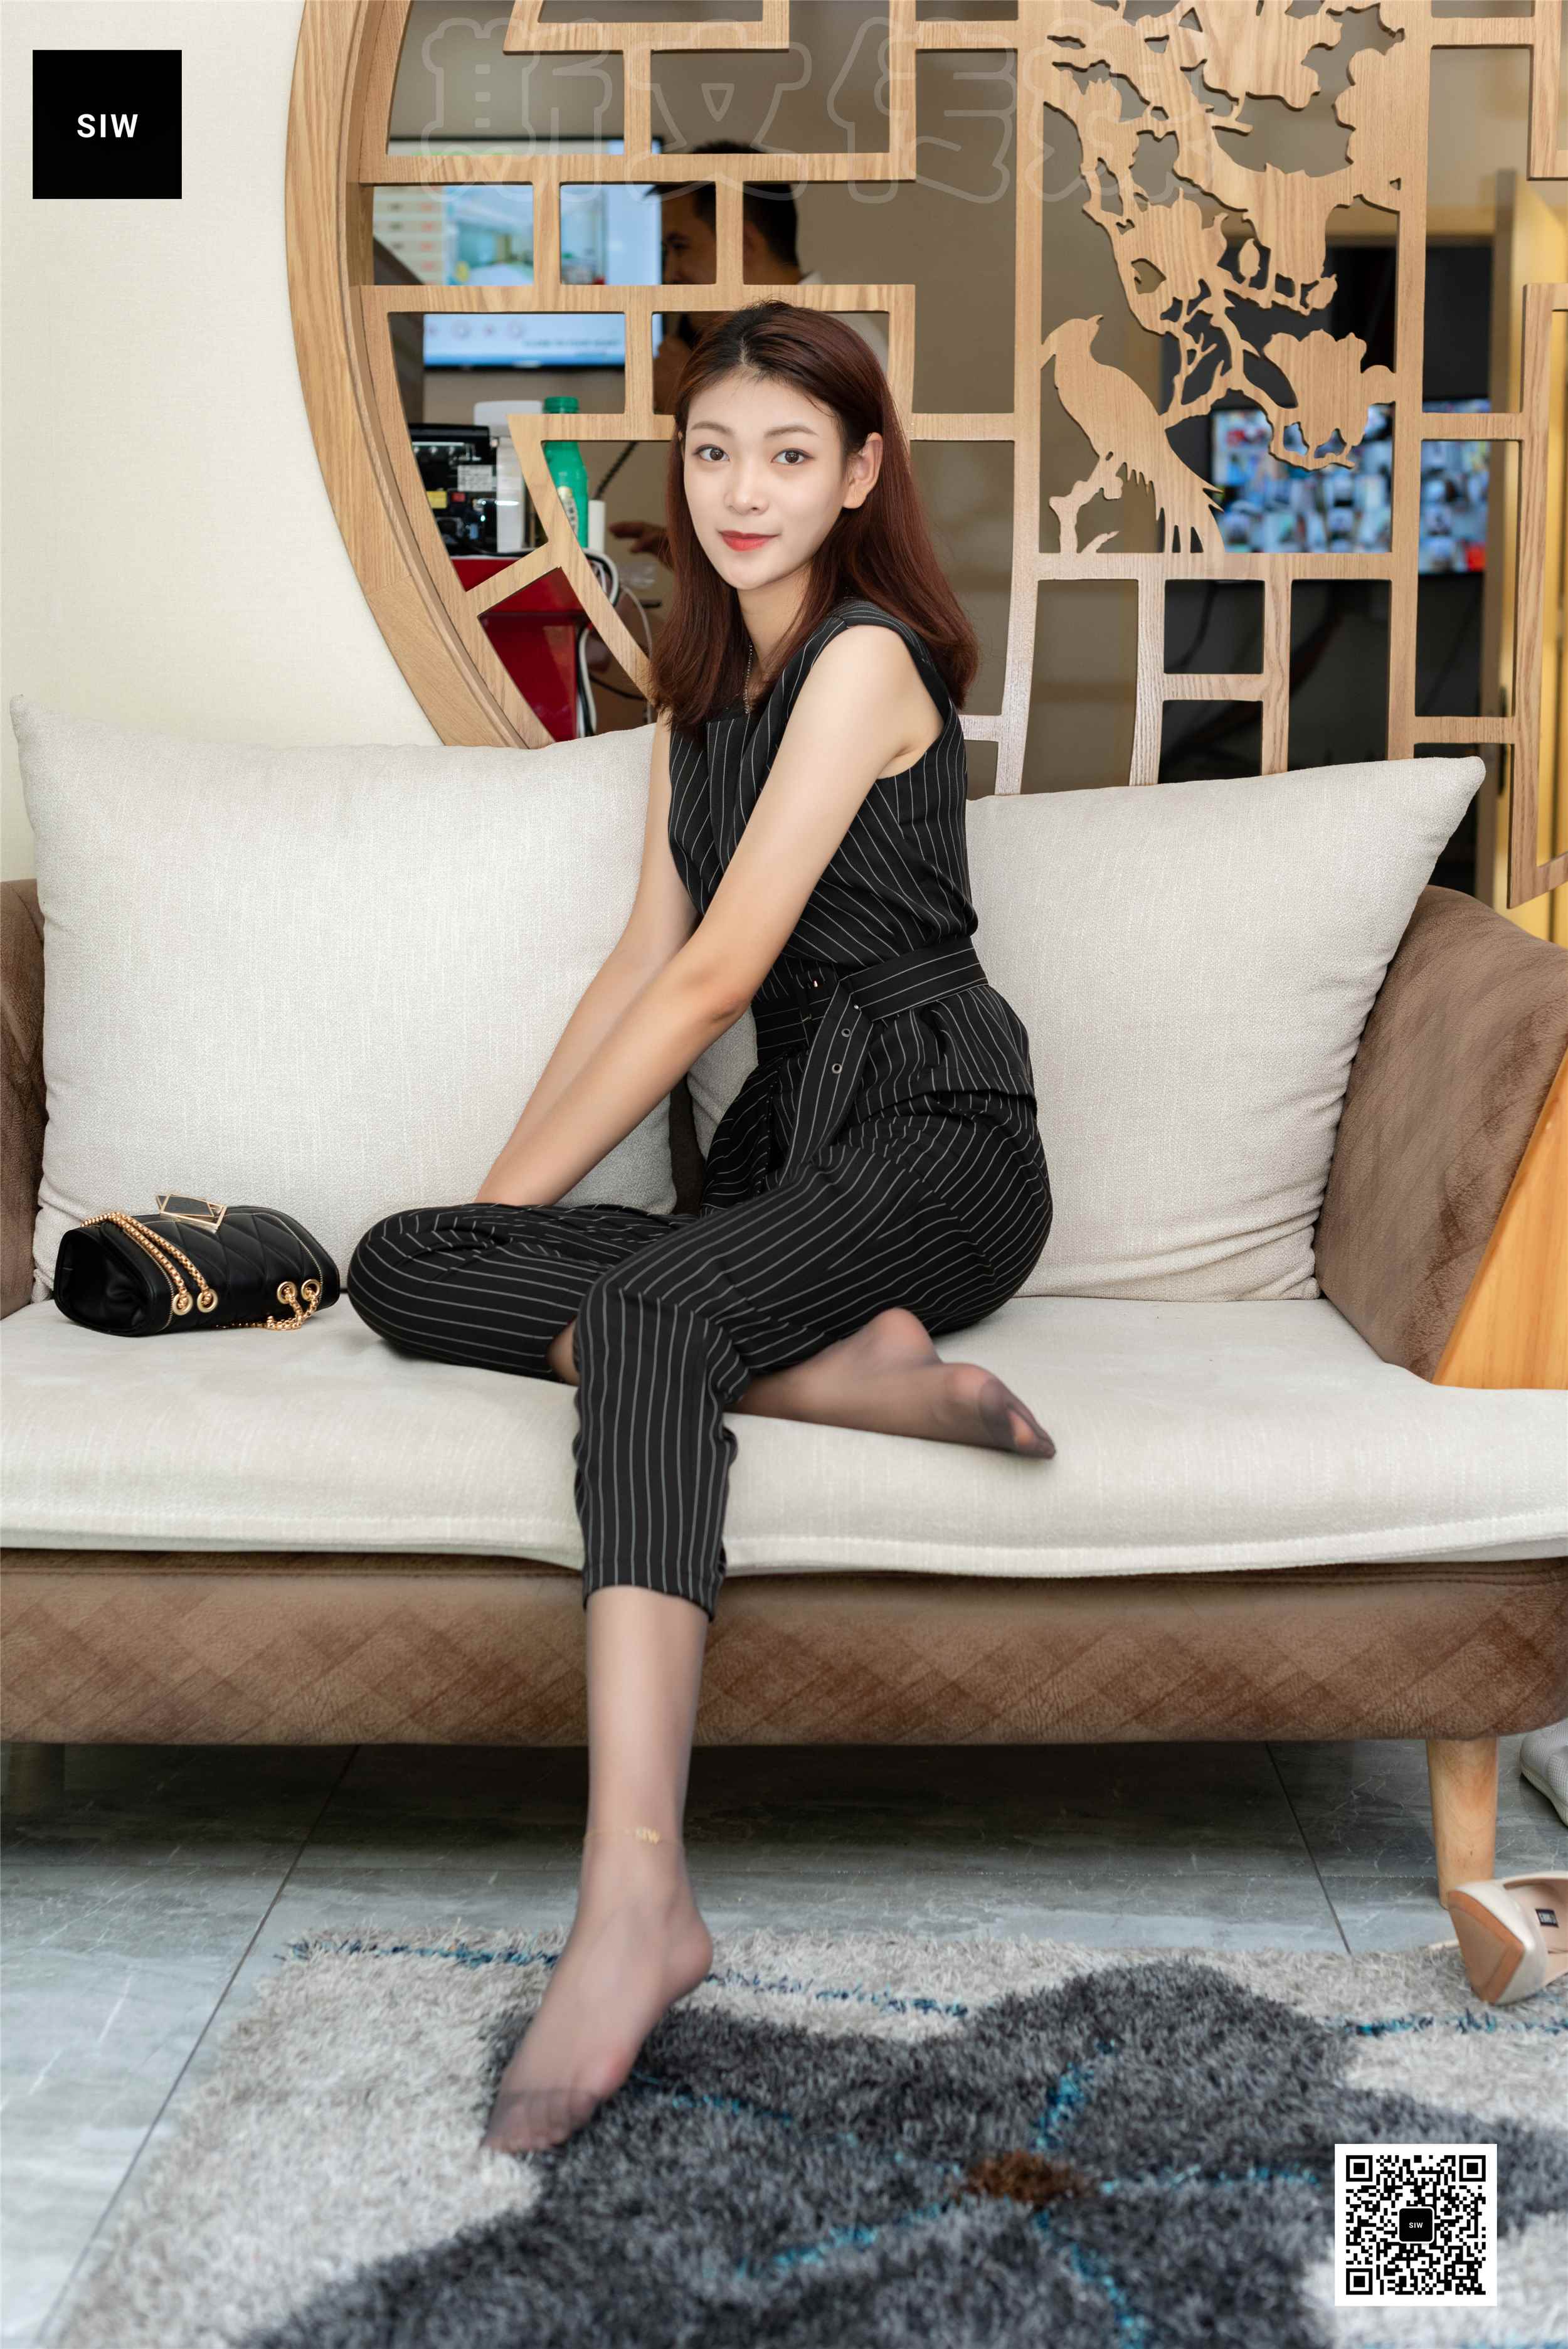 China Beauty Legs and feet 27